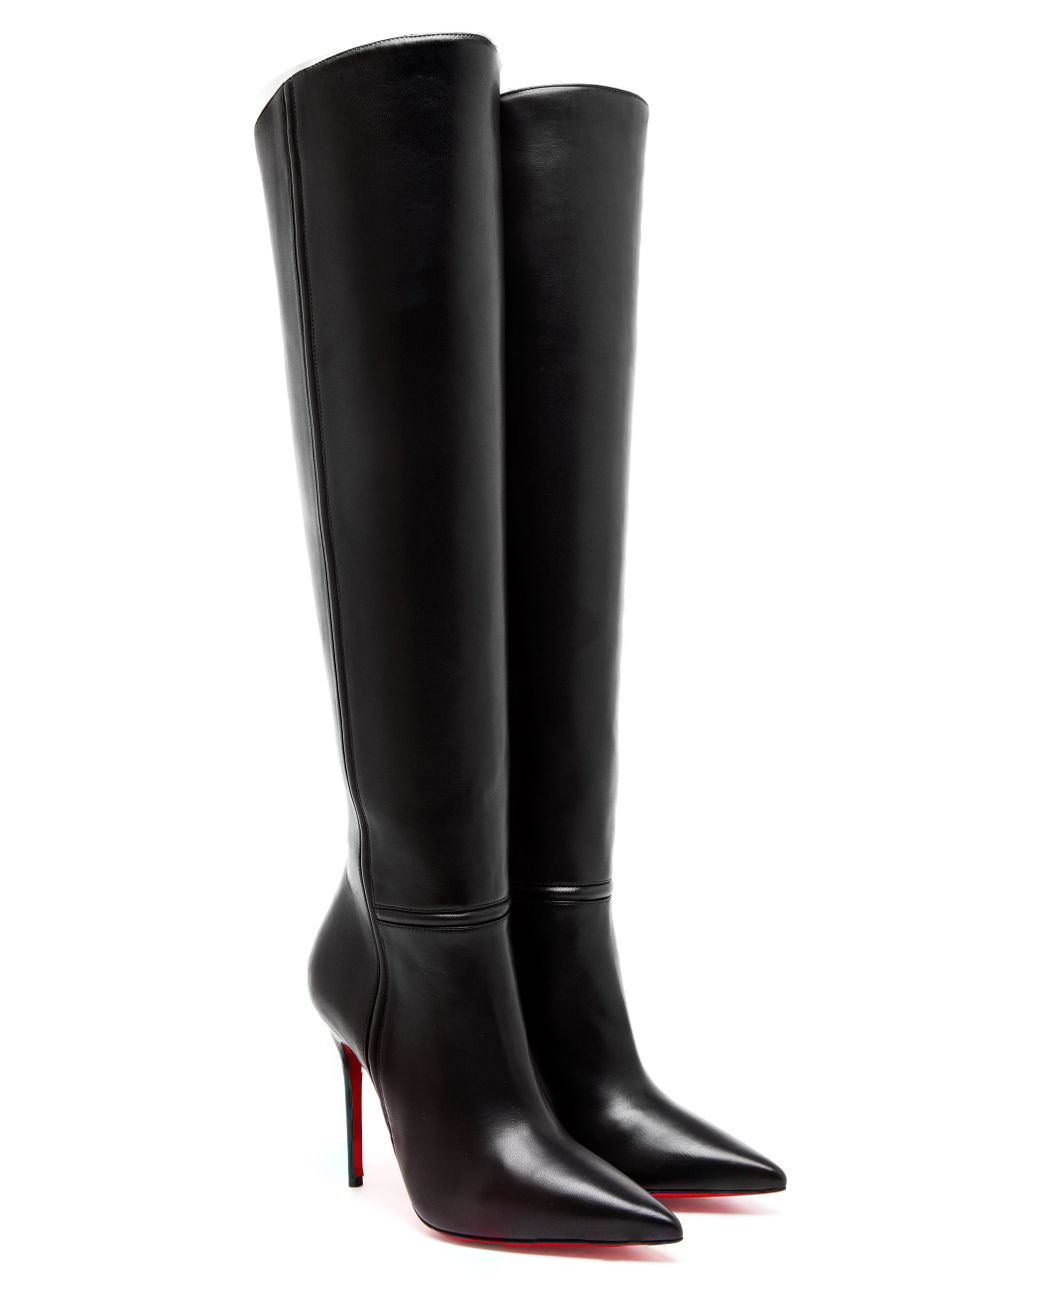 Christian Louboutin Armurabotta Leather Kneehigh Boots in Black | Lyst UK